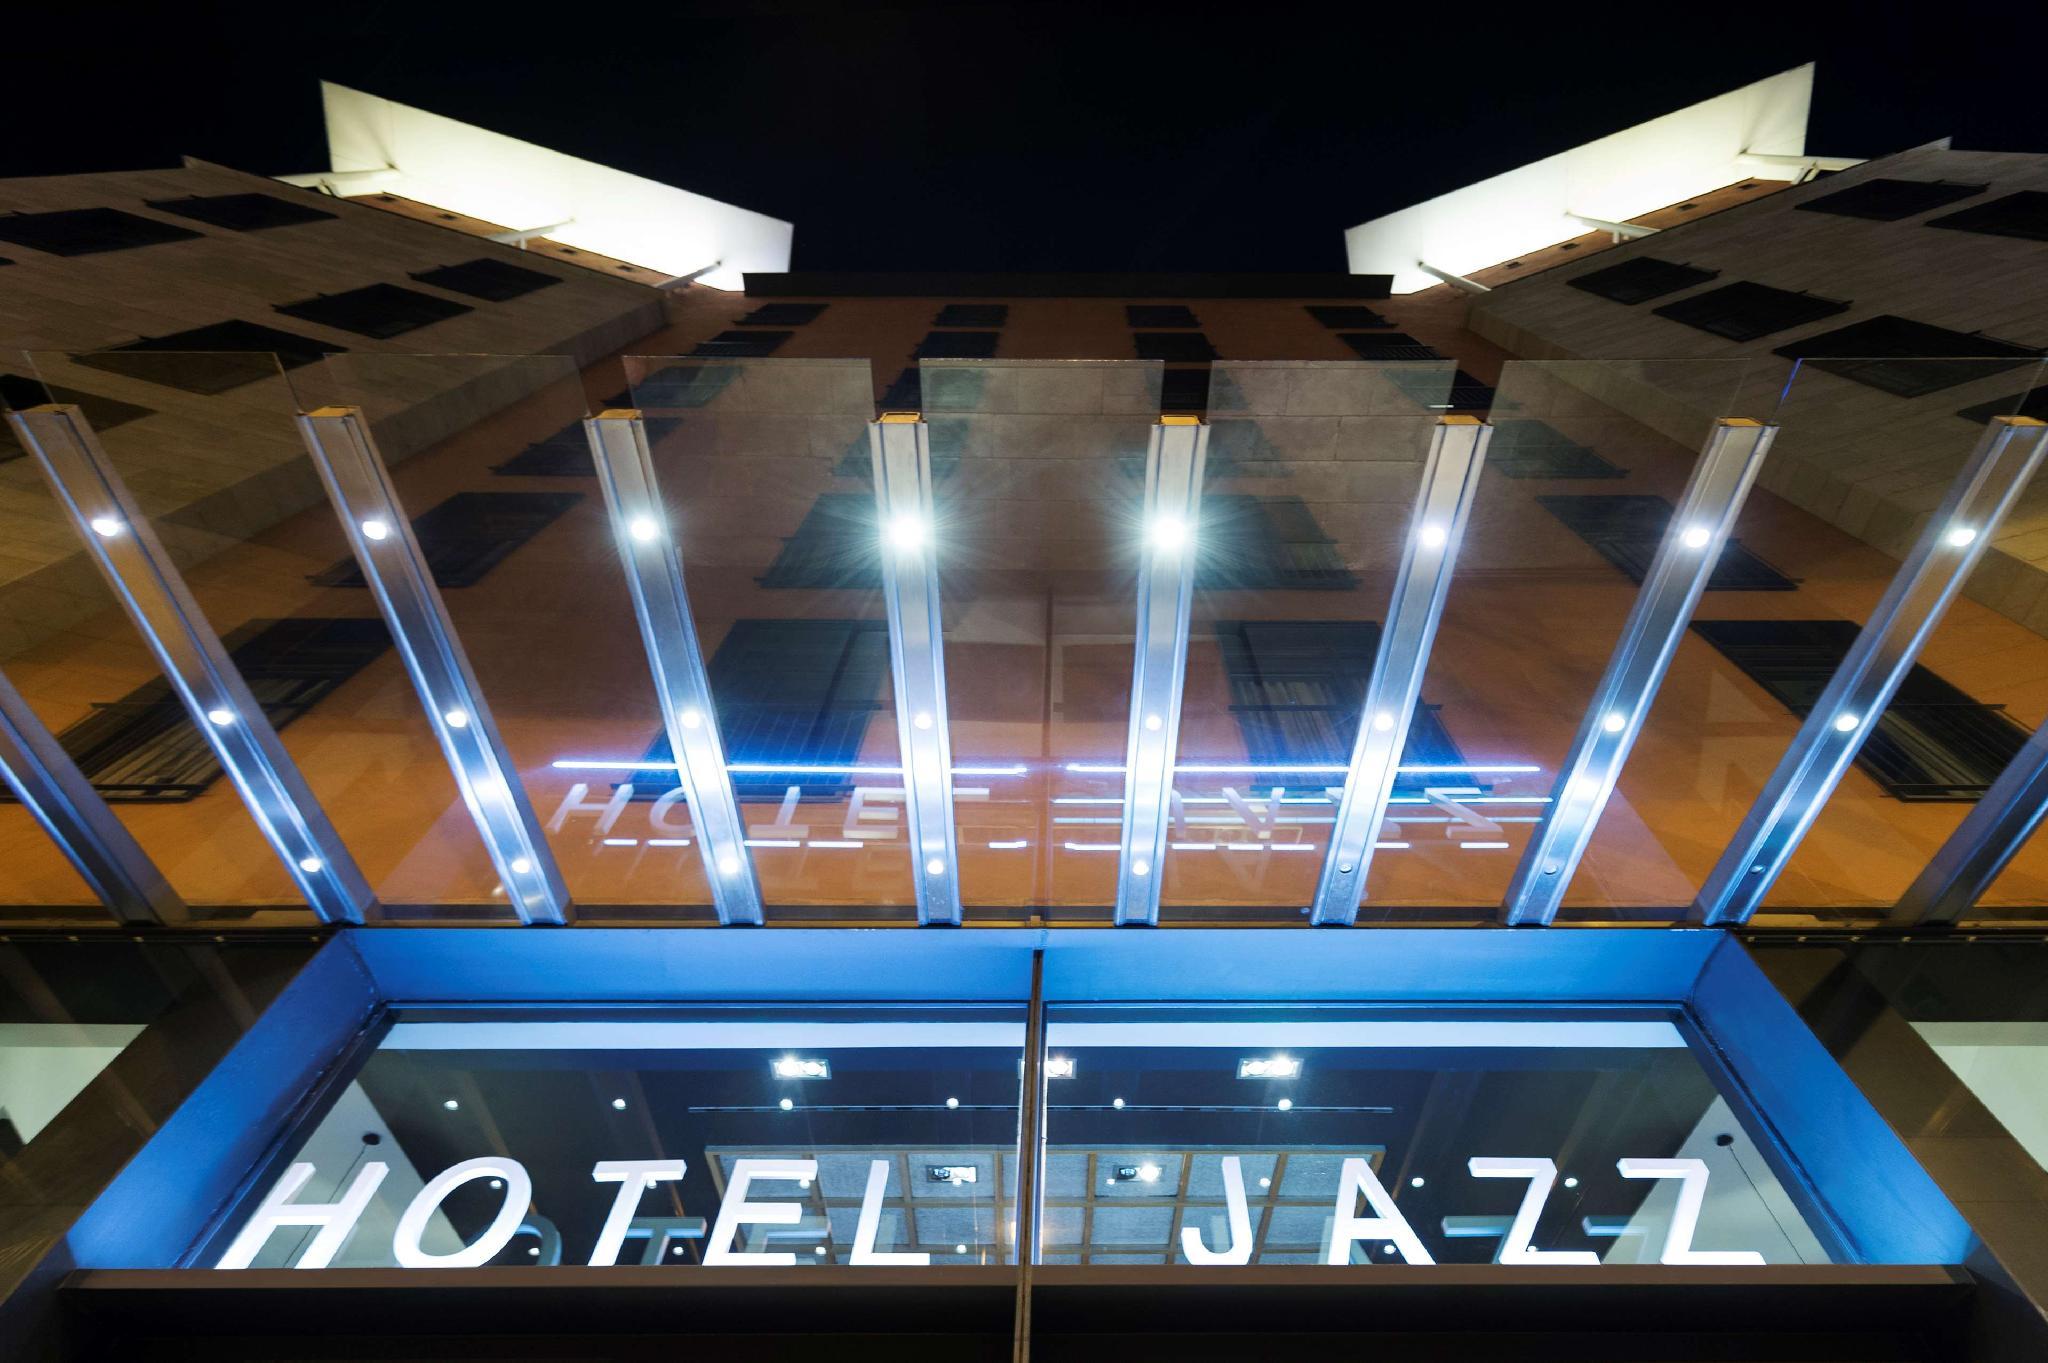 Hotel Jazz Barcelona Exterior photo